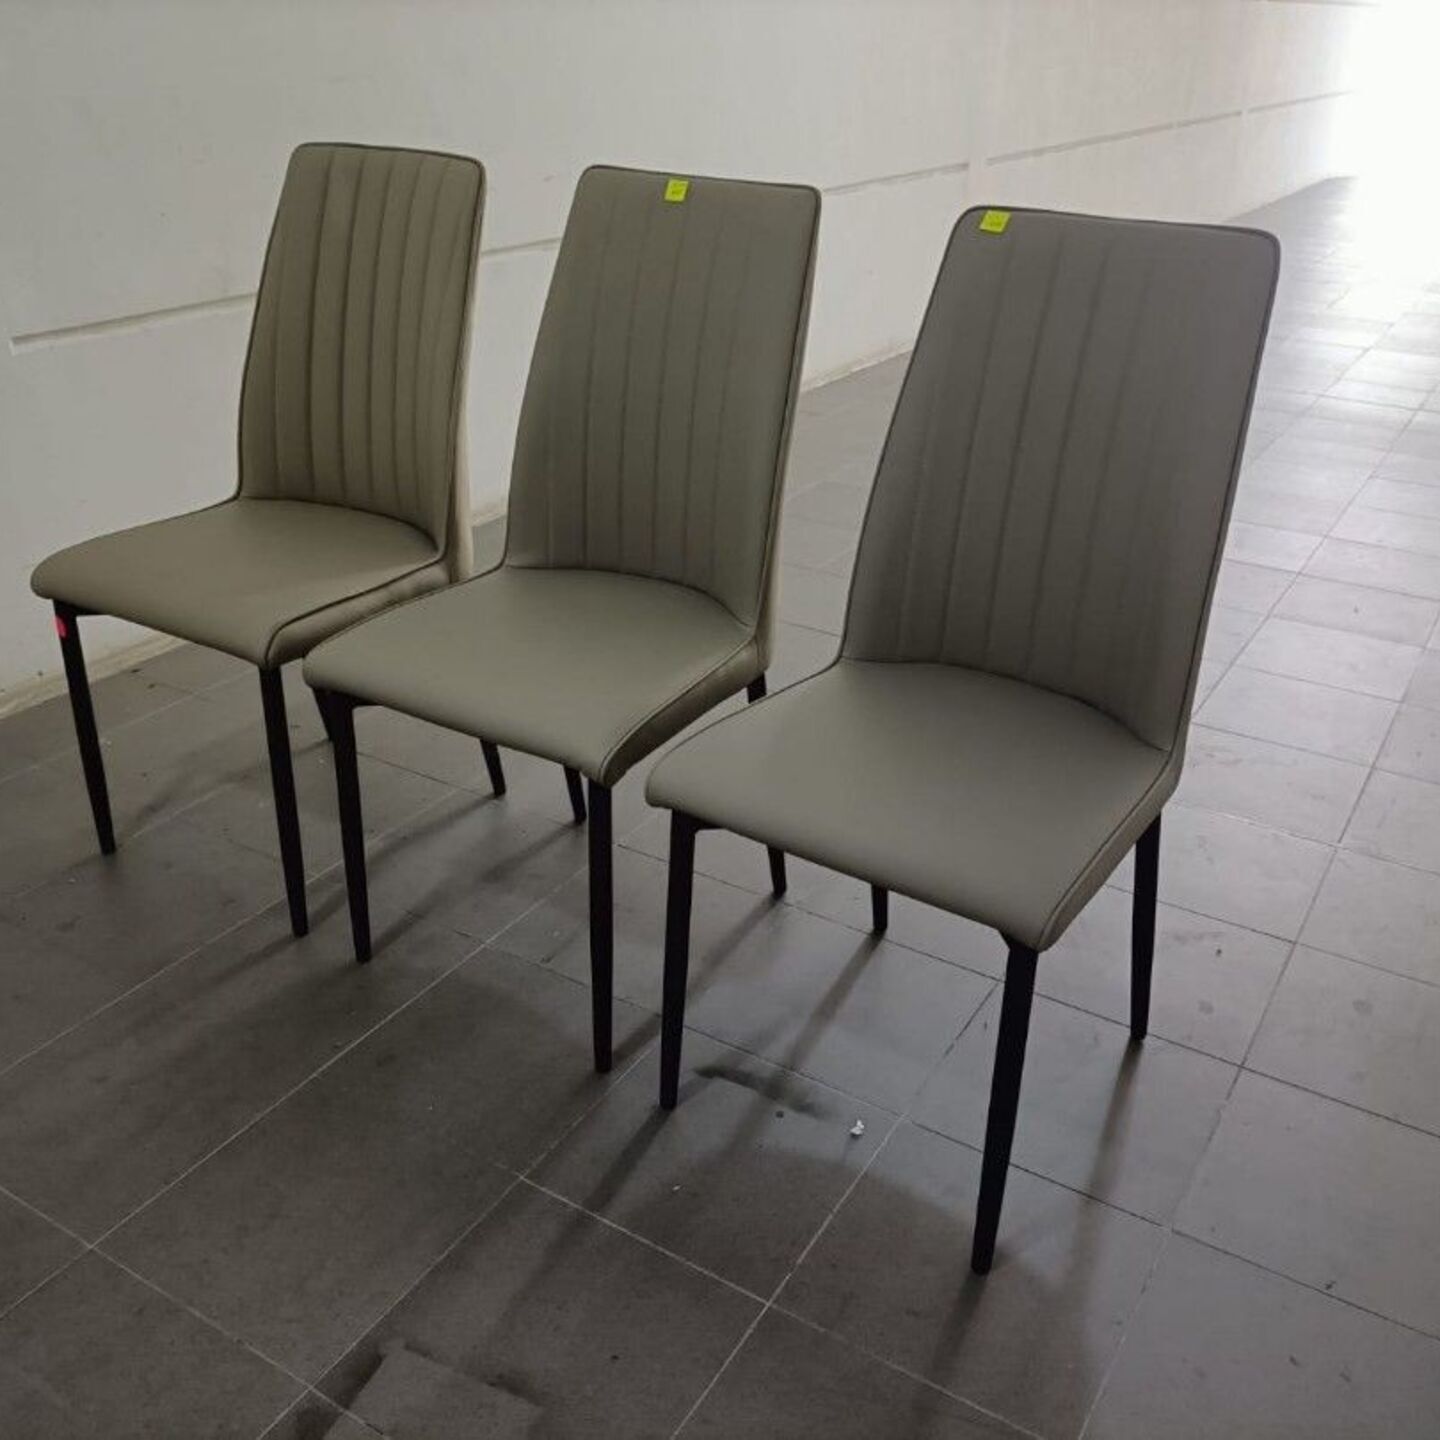 3 x HEREM Dining Chairs in DARK CREAM